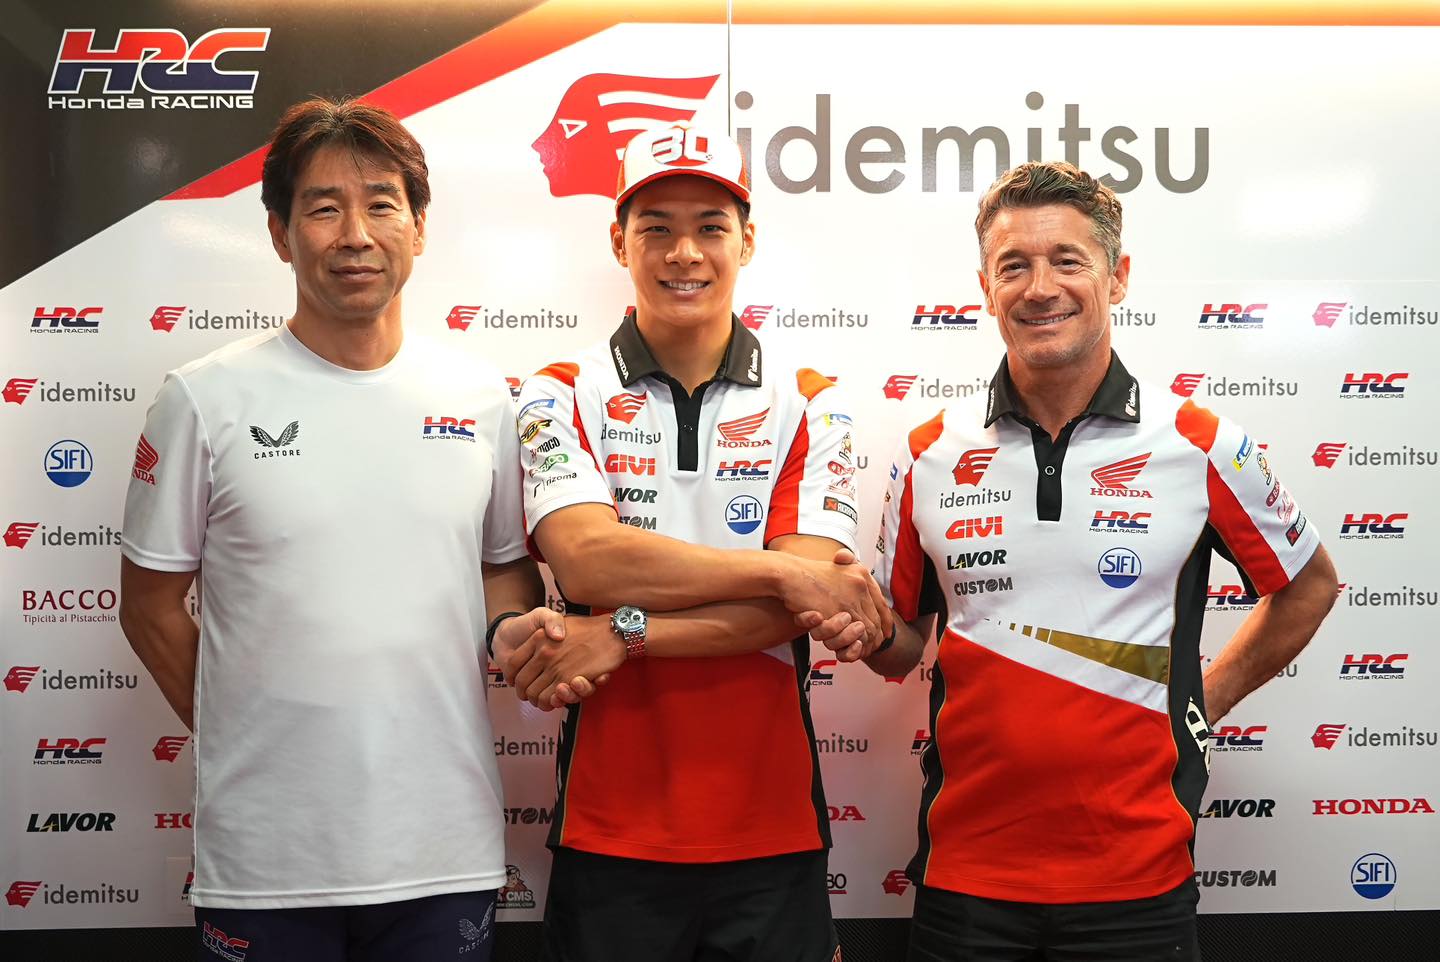 Takaaki Nakagami will remain with the LCR Honda